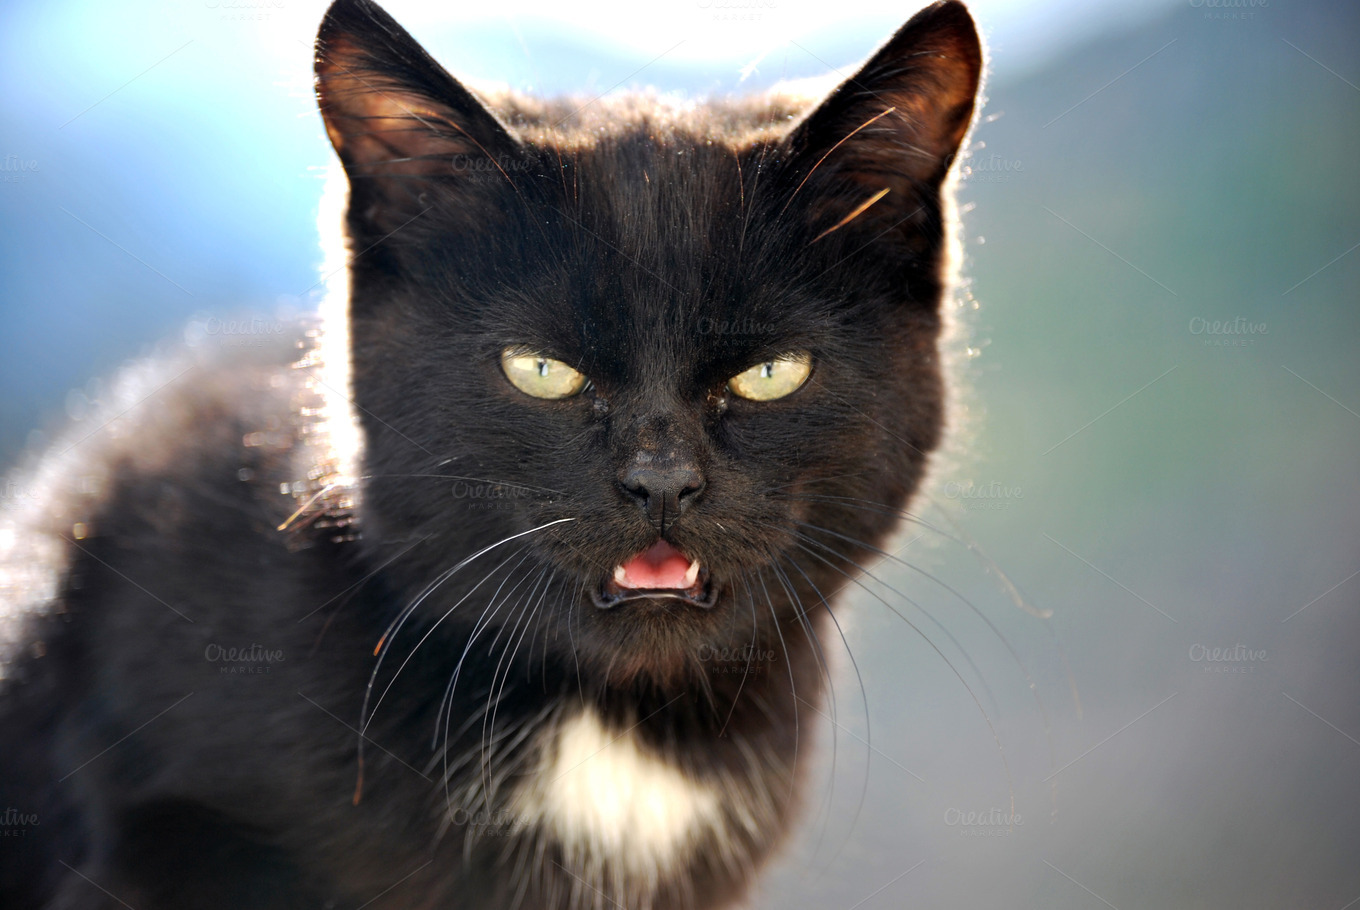  black cat face  Animal Photos on Creative Market